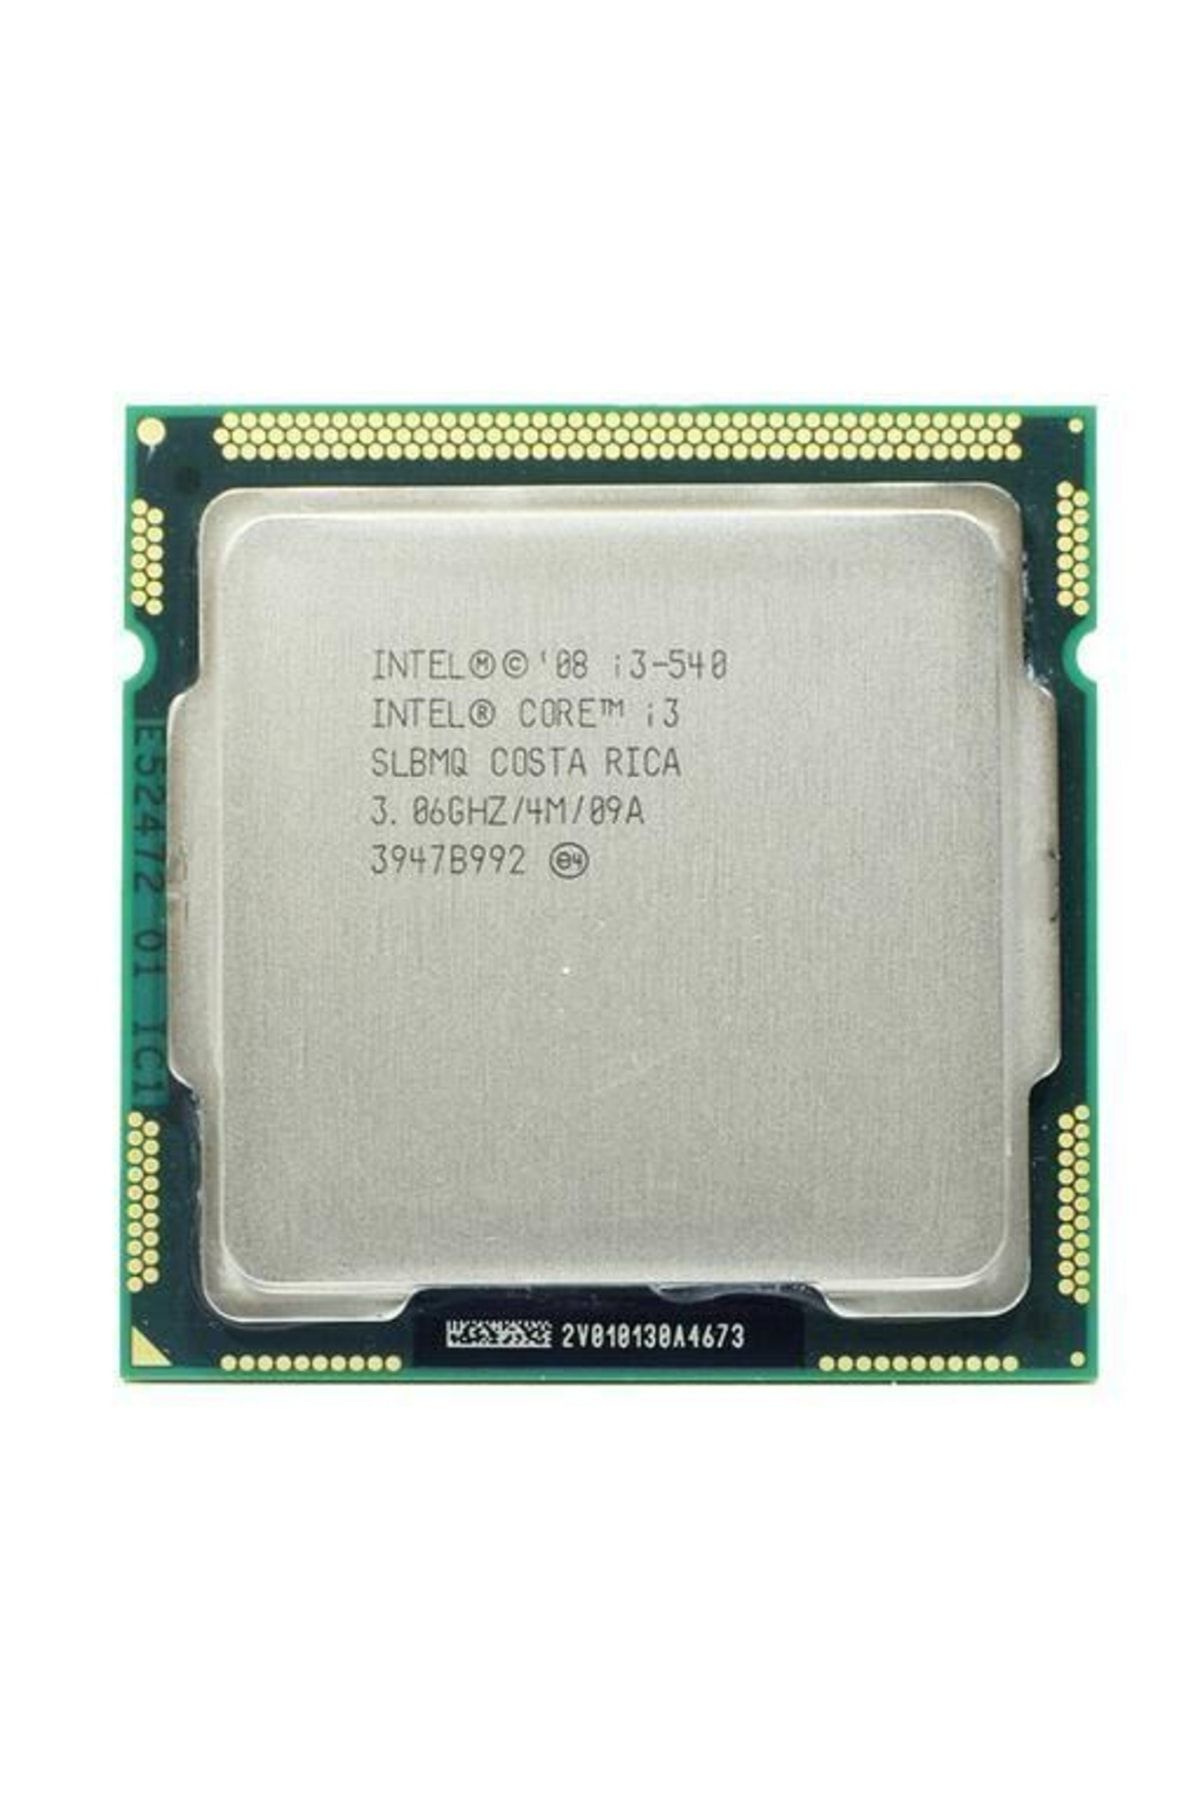 Intel ® Core™ I3-540 Işlemci 4m Ön Bellek, 3,06 Ghz 1156 Pin 2.el Deskop Işlemci